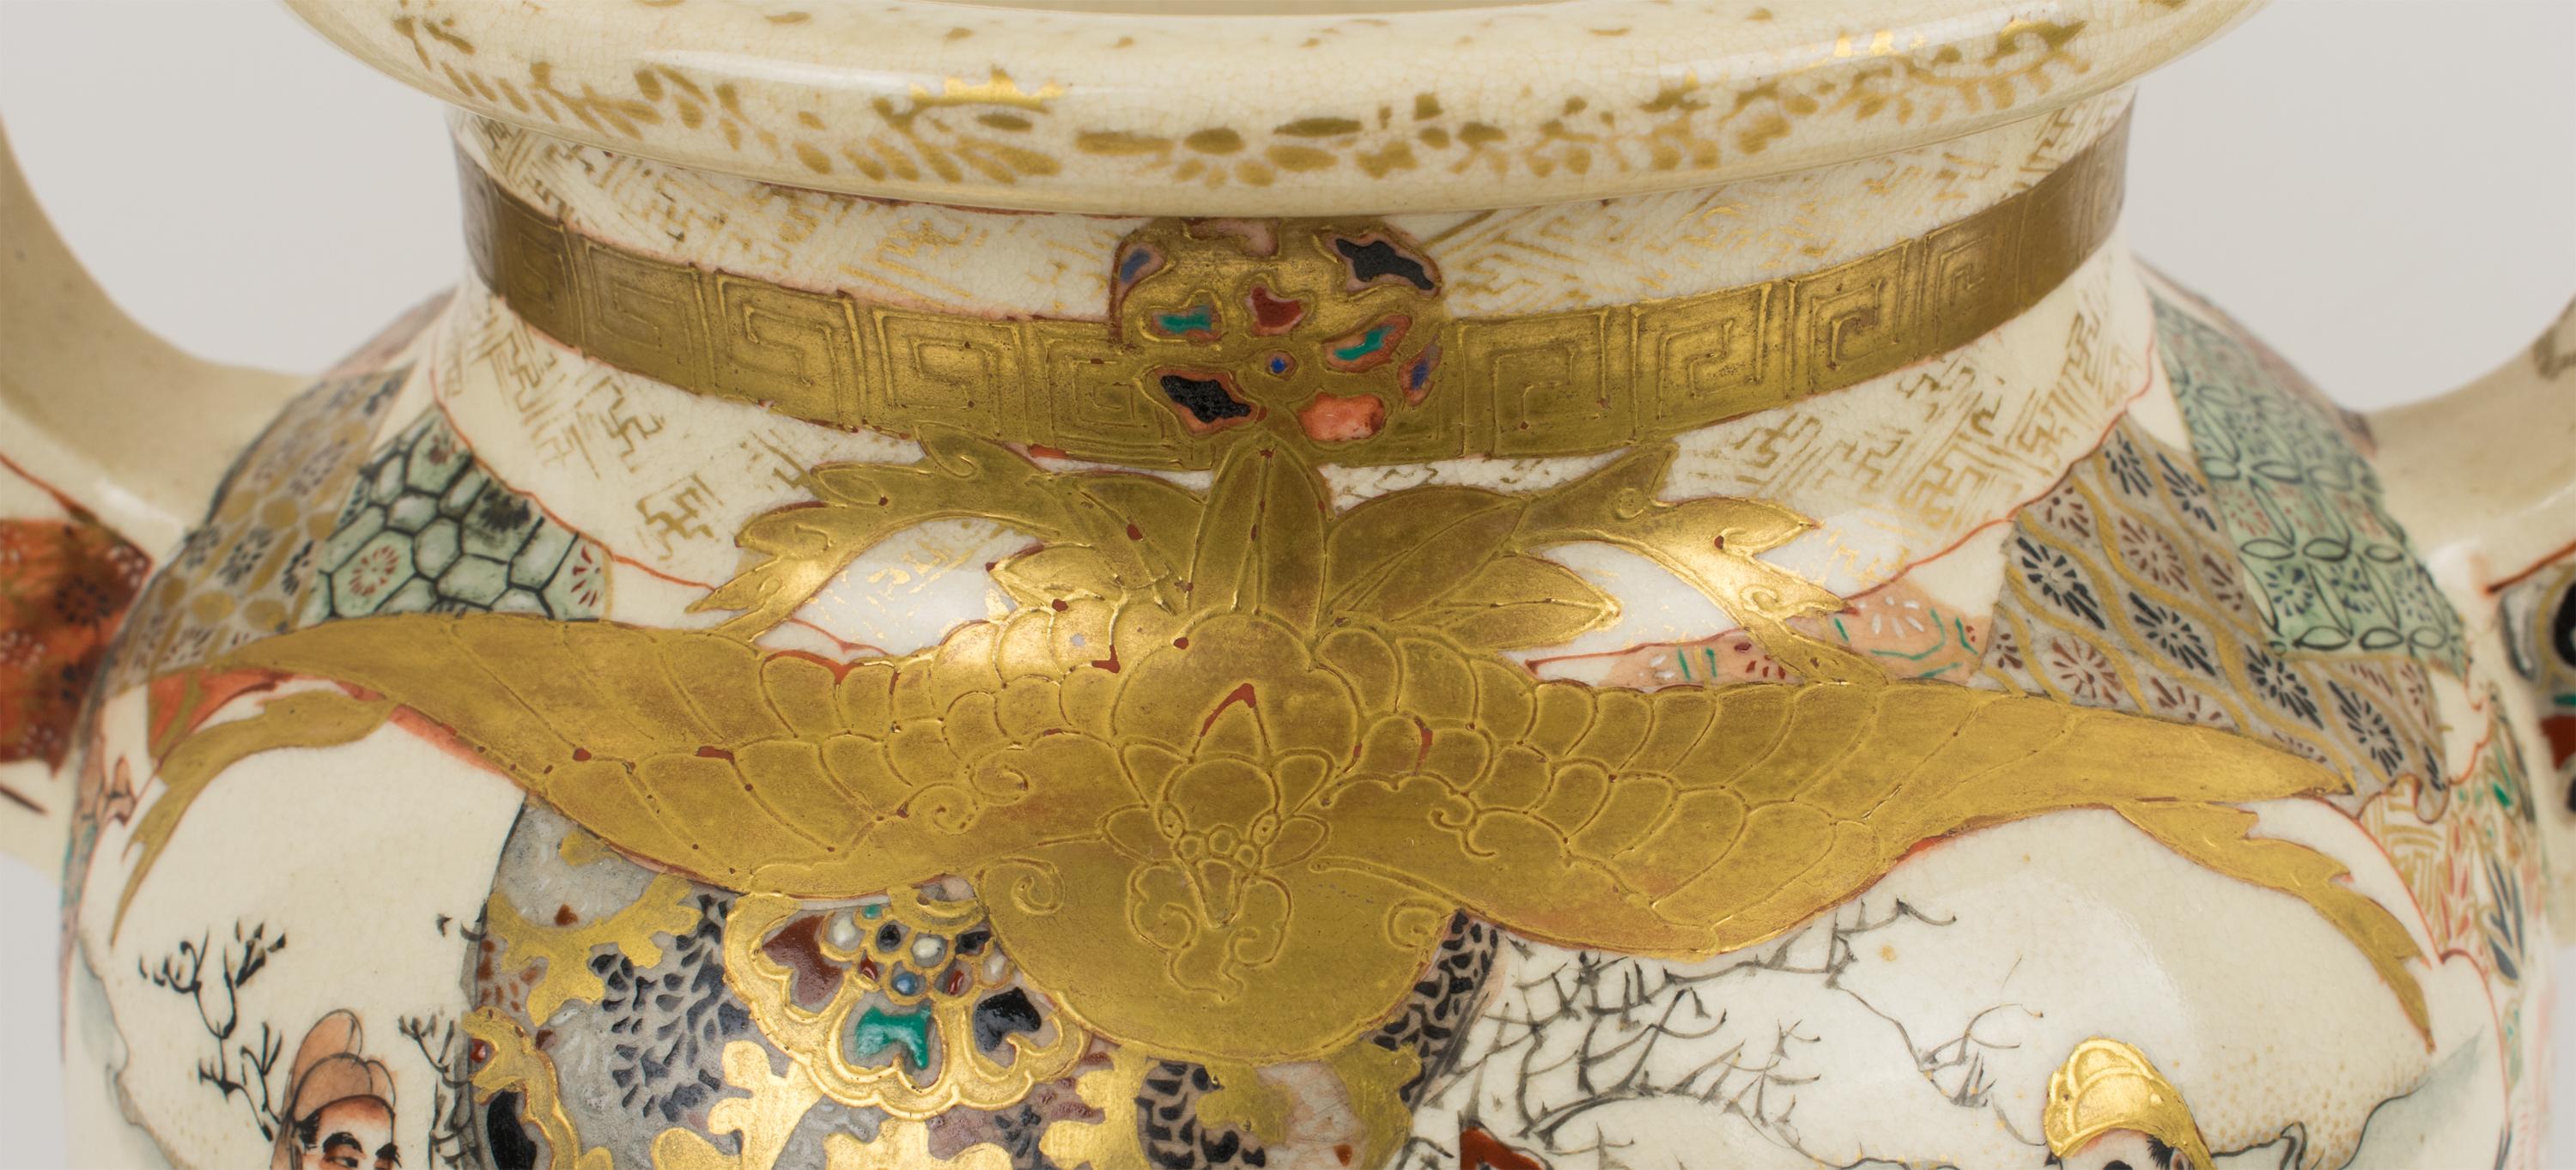 Important Antique Japanese Meiji Satsuma Covered Urn Vase with Foo Dog For Sale 7